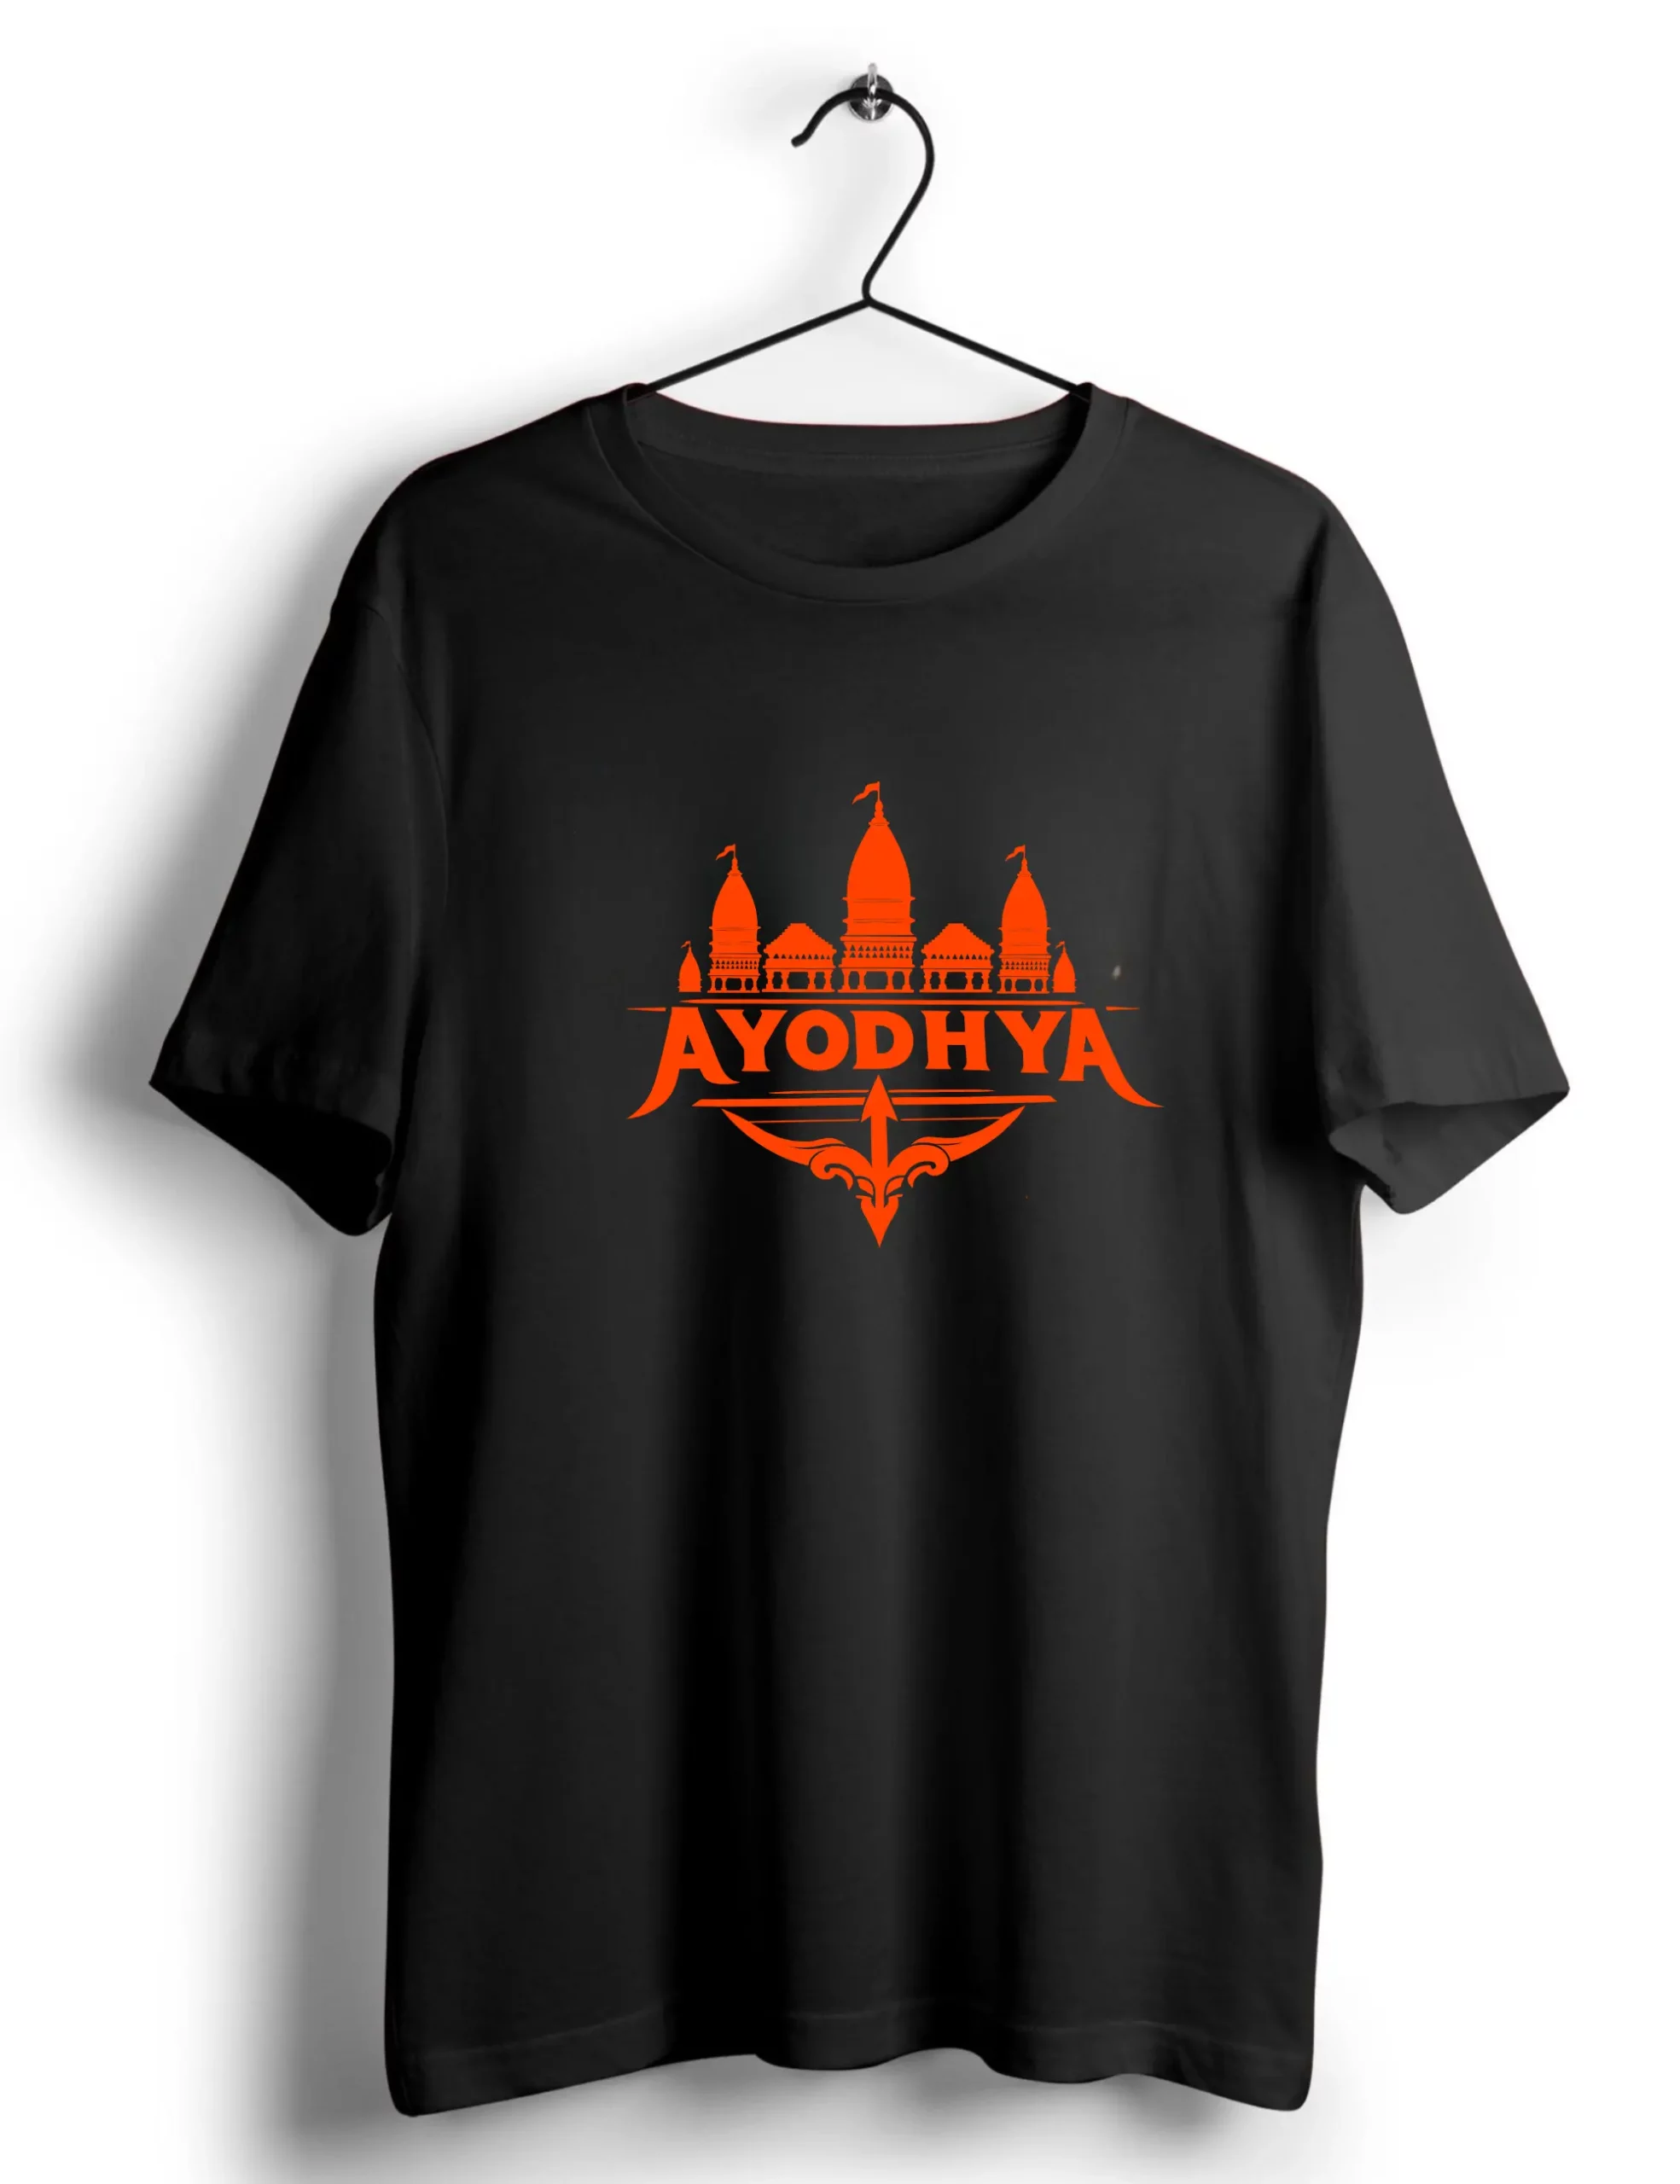 Ayodhya ram mandir t shirt Vector design 36528472 Vector Art at Vecteezy